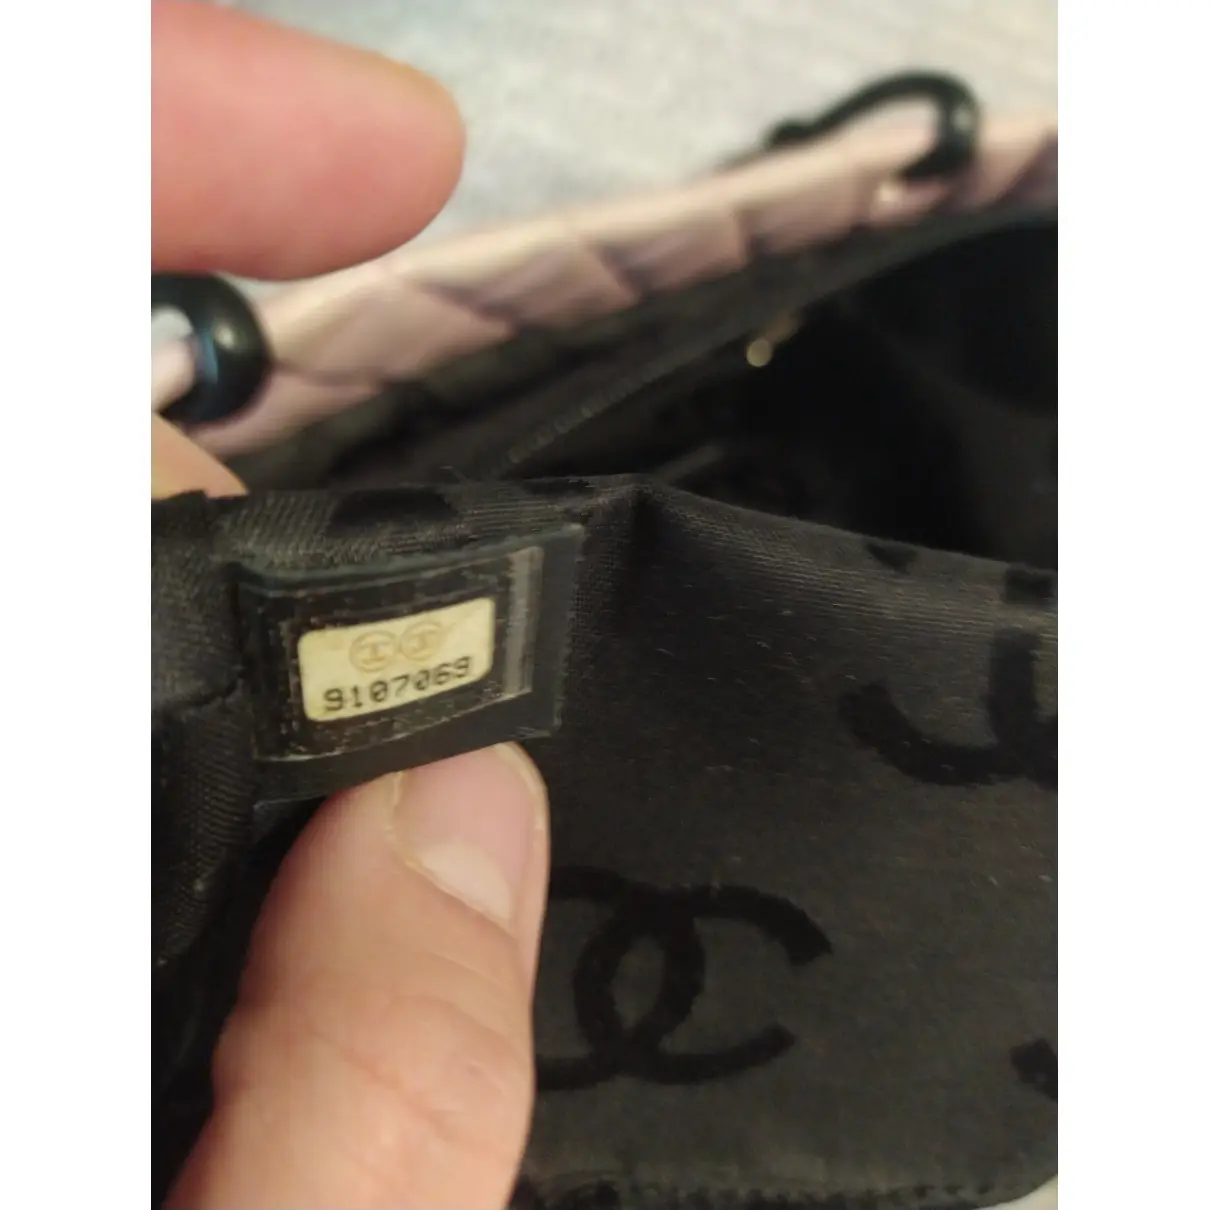 Buy Chanel Cambon leather handbag online